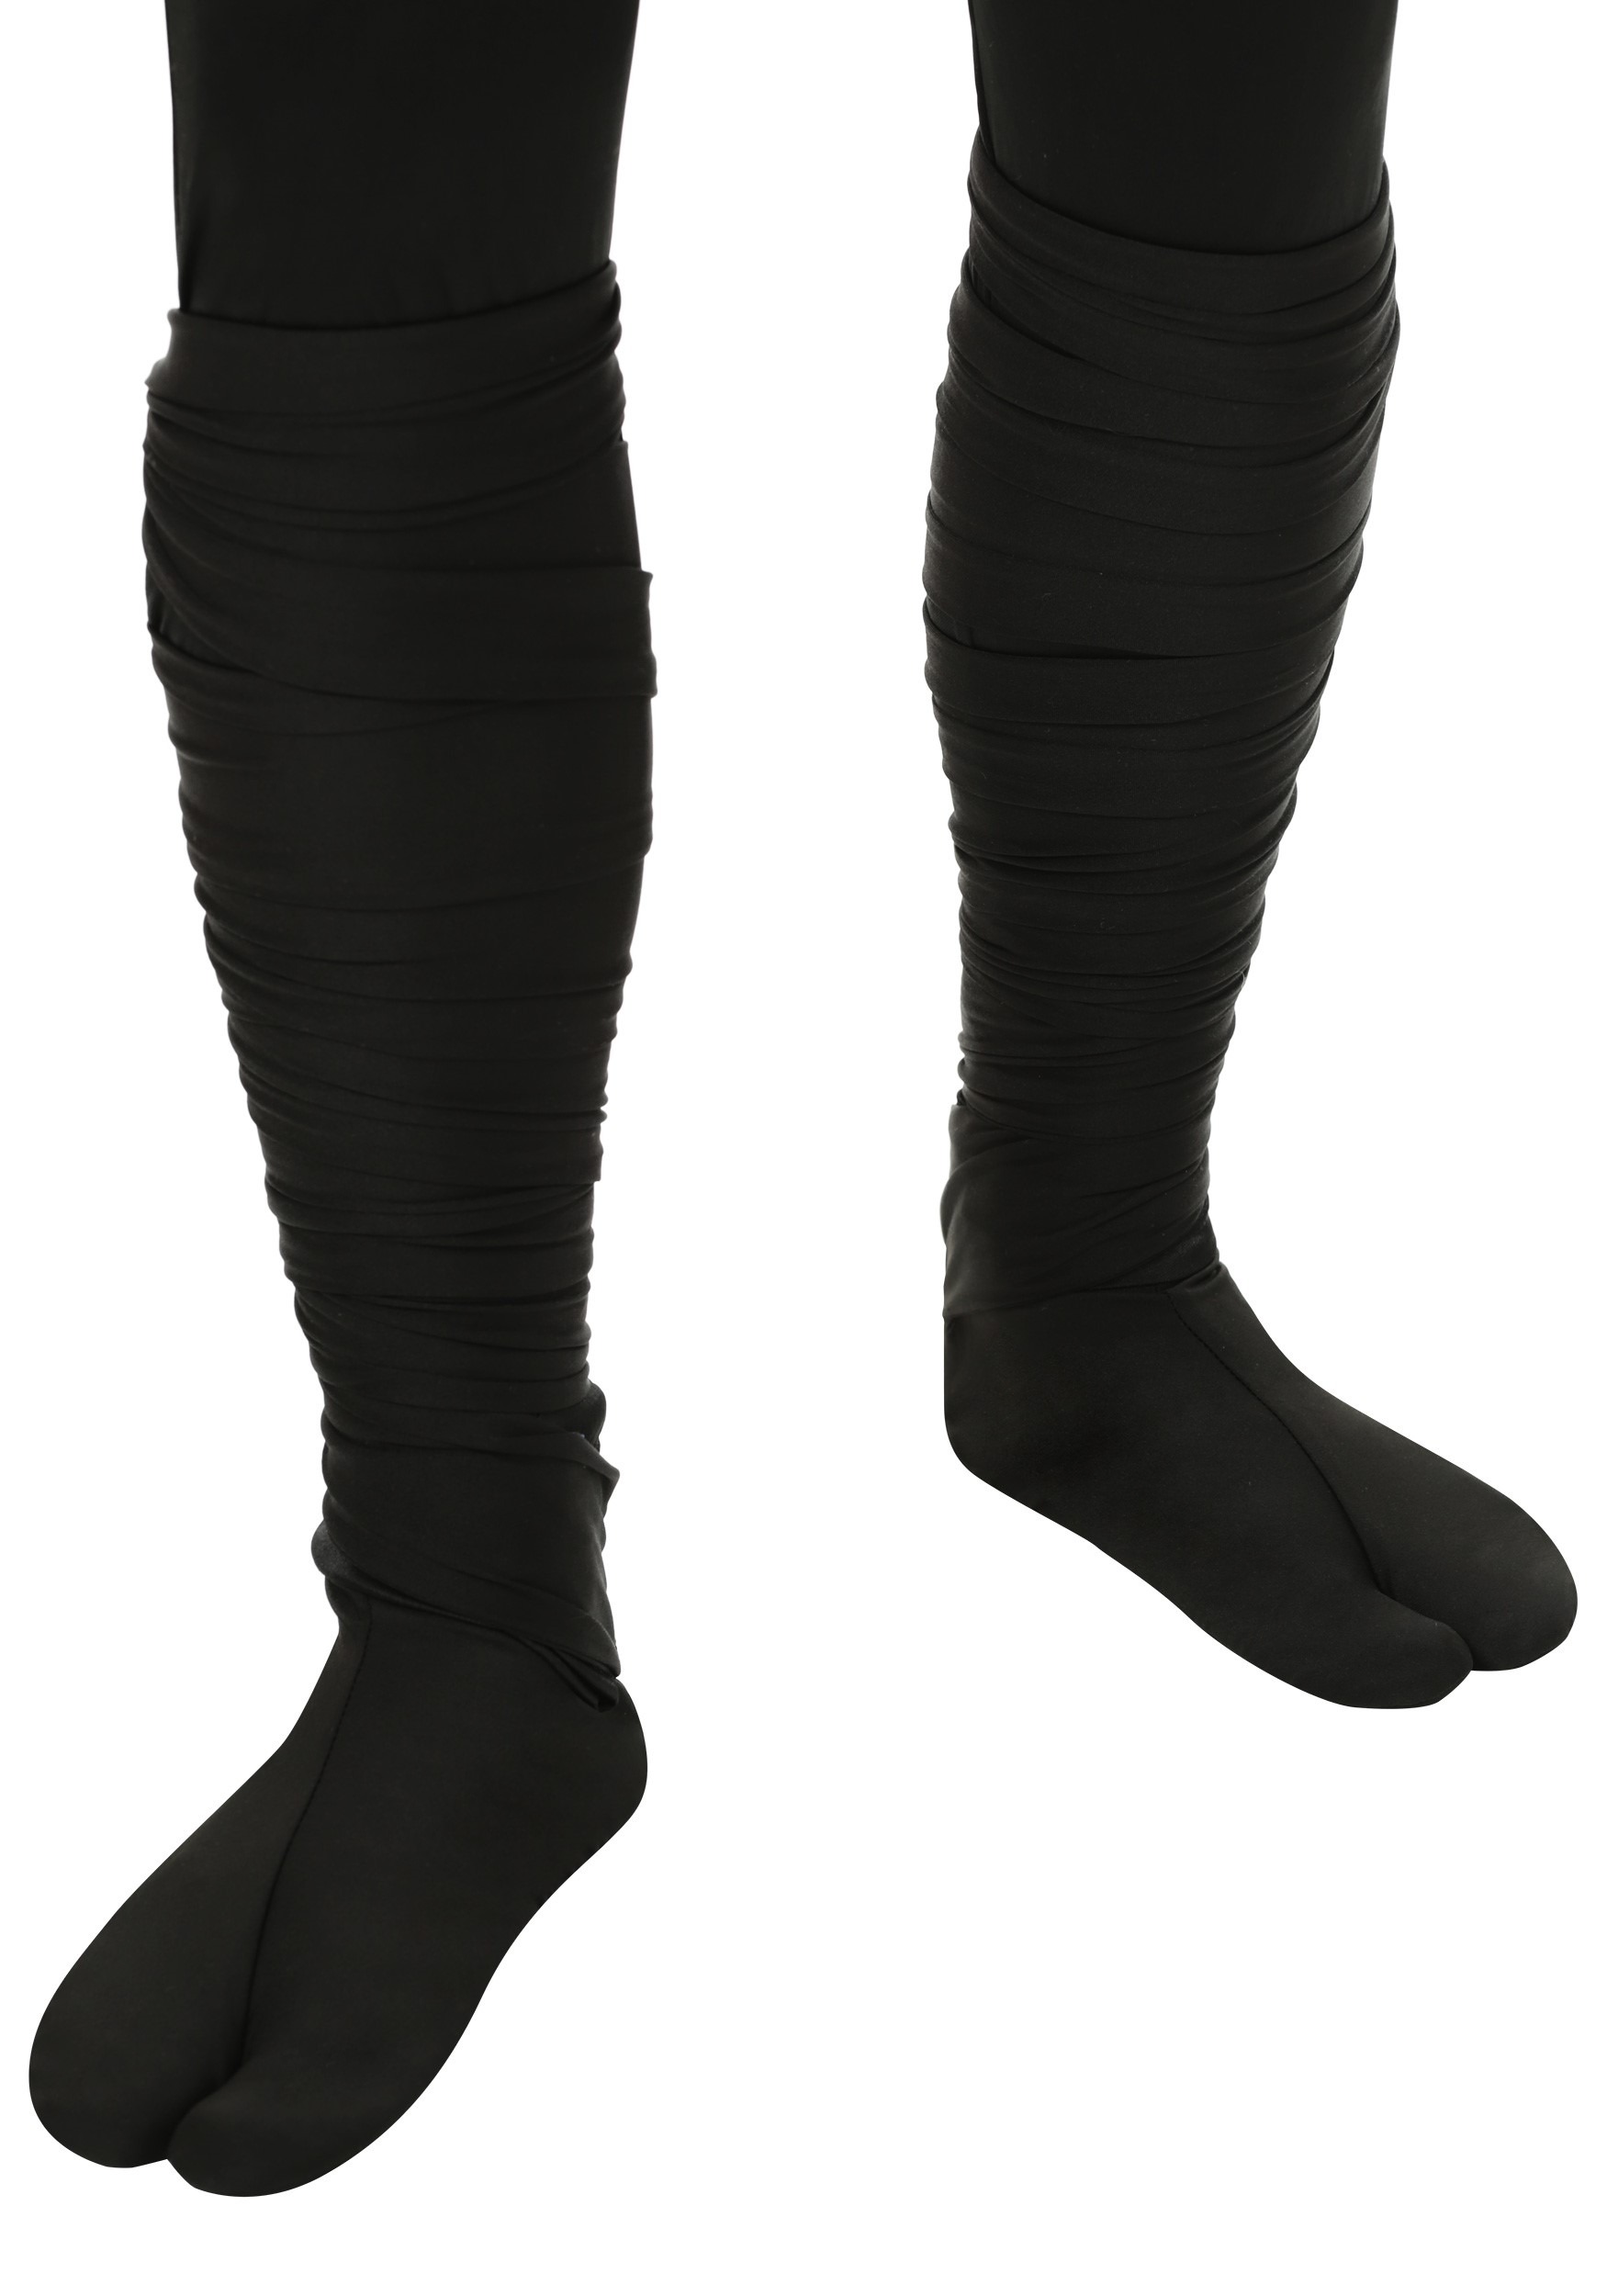 Ninja Fancy Dress Costume Adult Boots